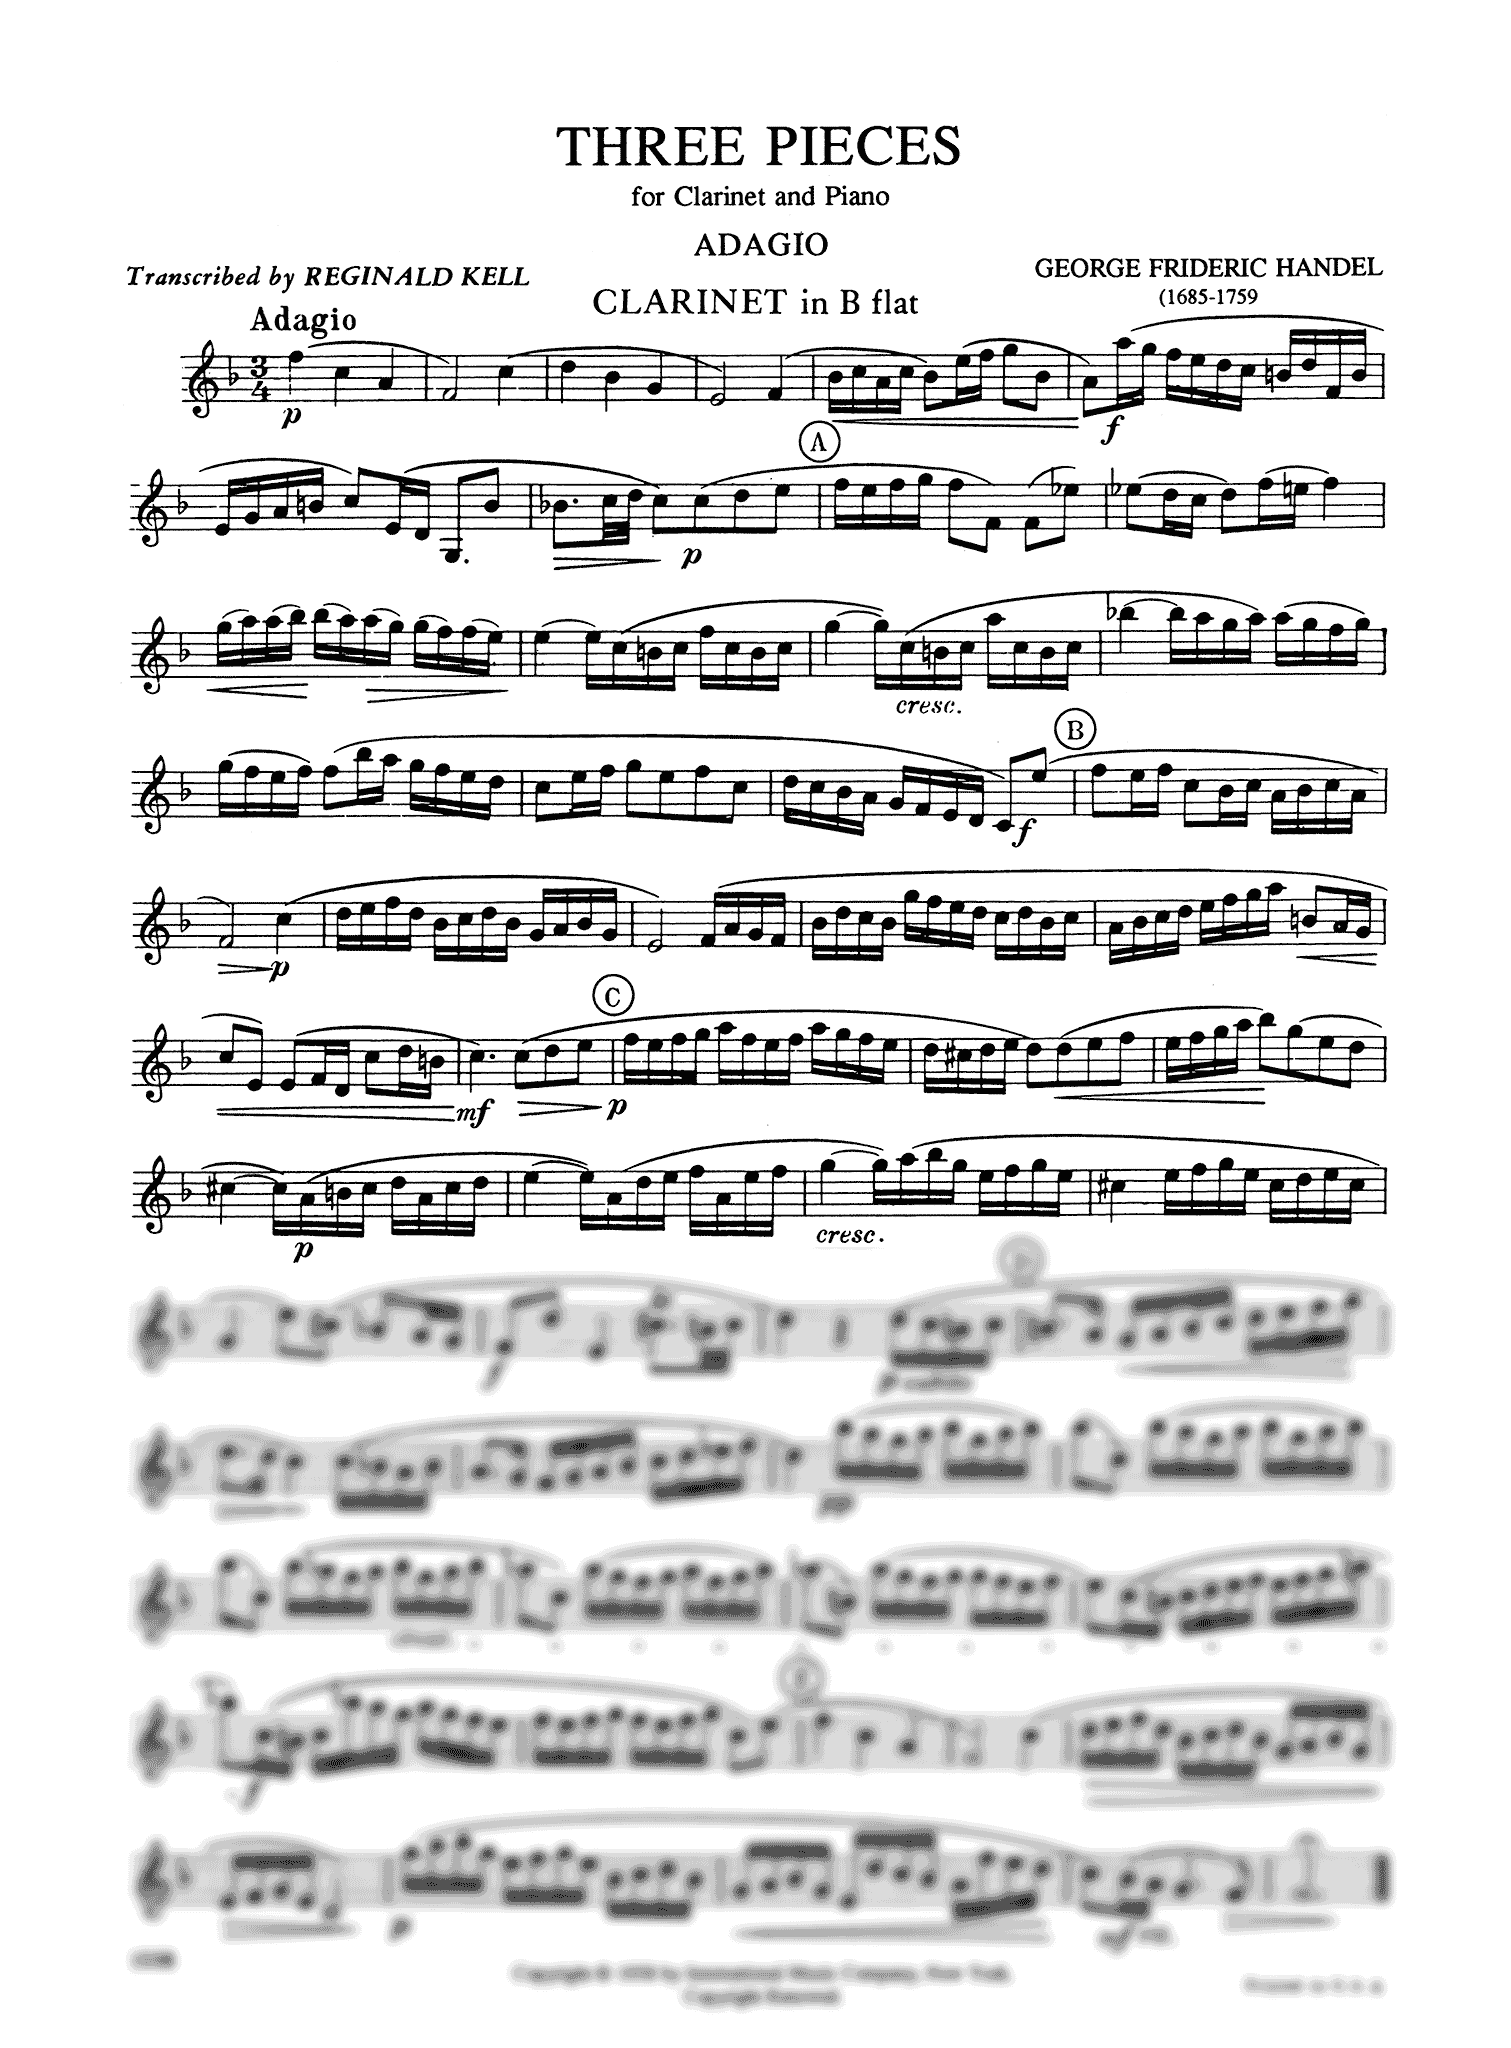 Handel Kell Three Pieces for Clarinet part